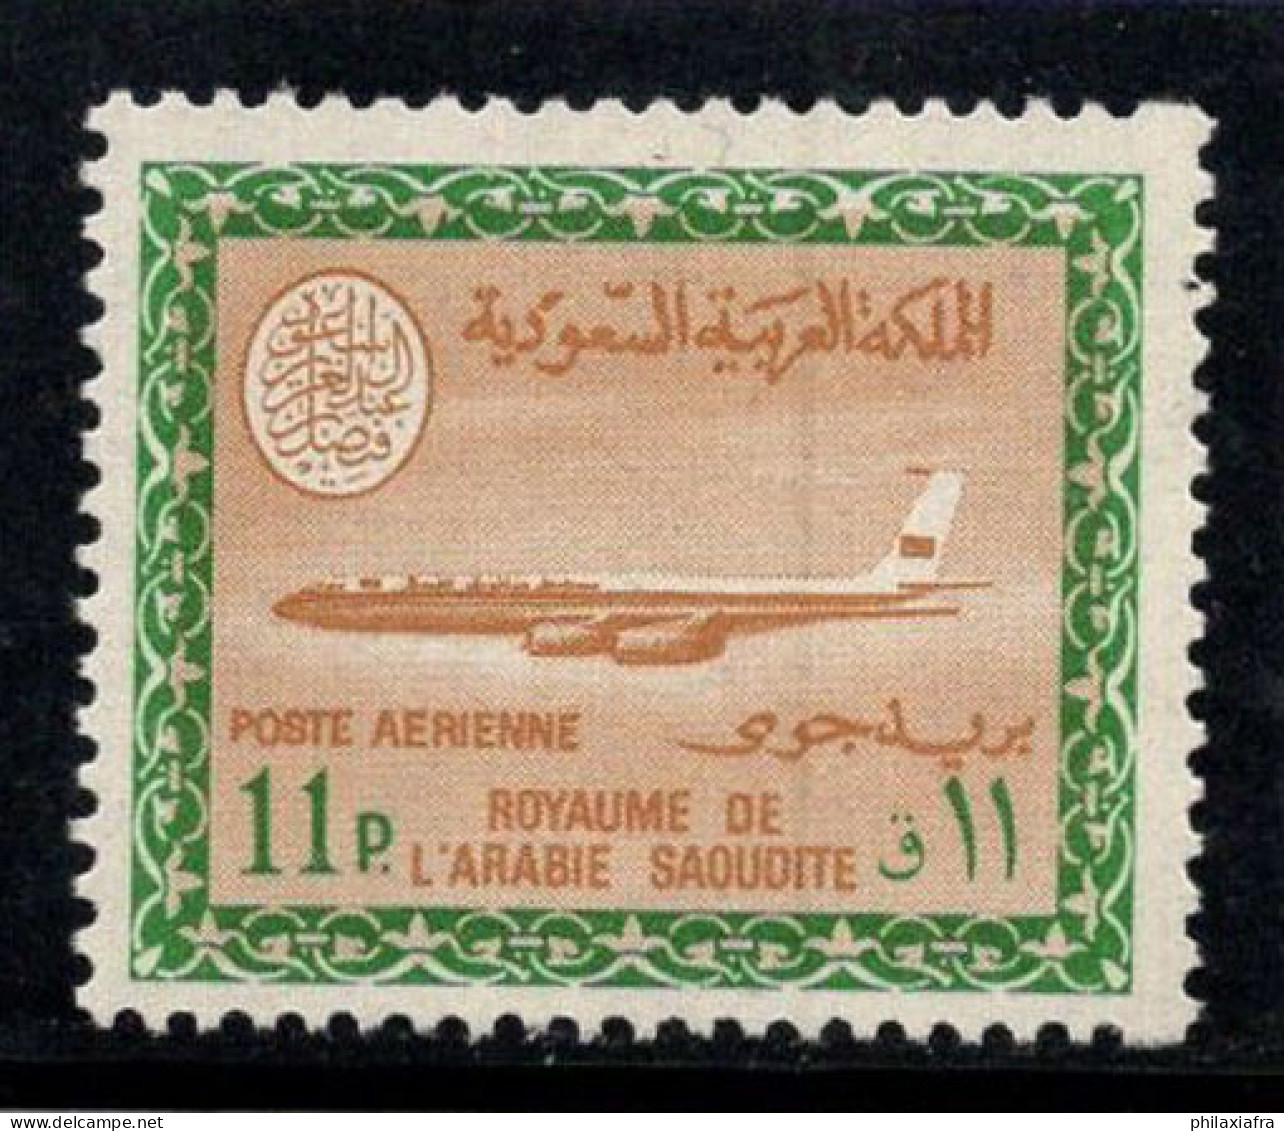 Arabie Saoudite 1966-75 Mi. 365 Y Neuf ** 100% Poste Aérienne 11 Pia, Boeing 720 B - Saudi Arabia